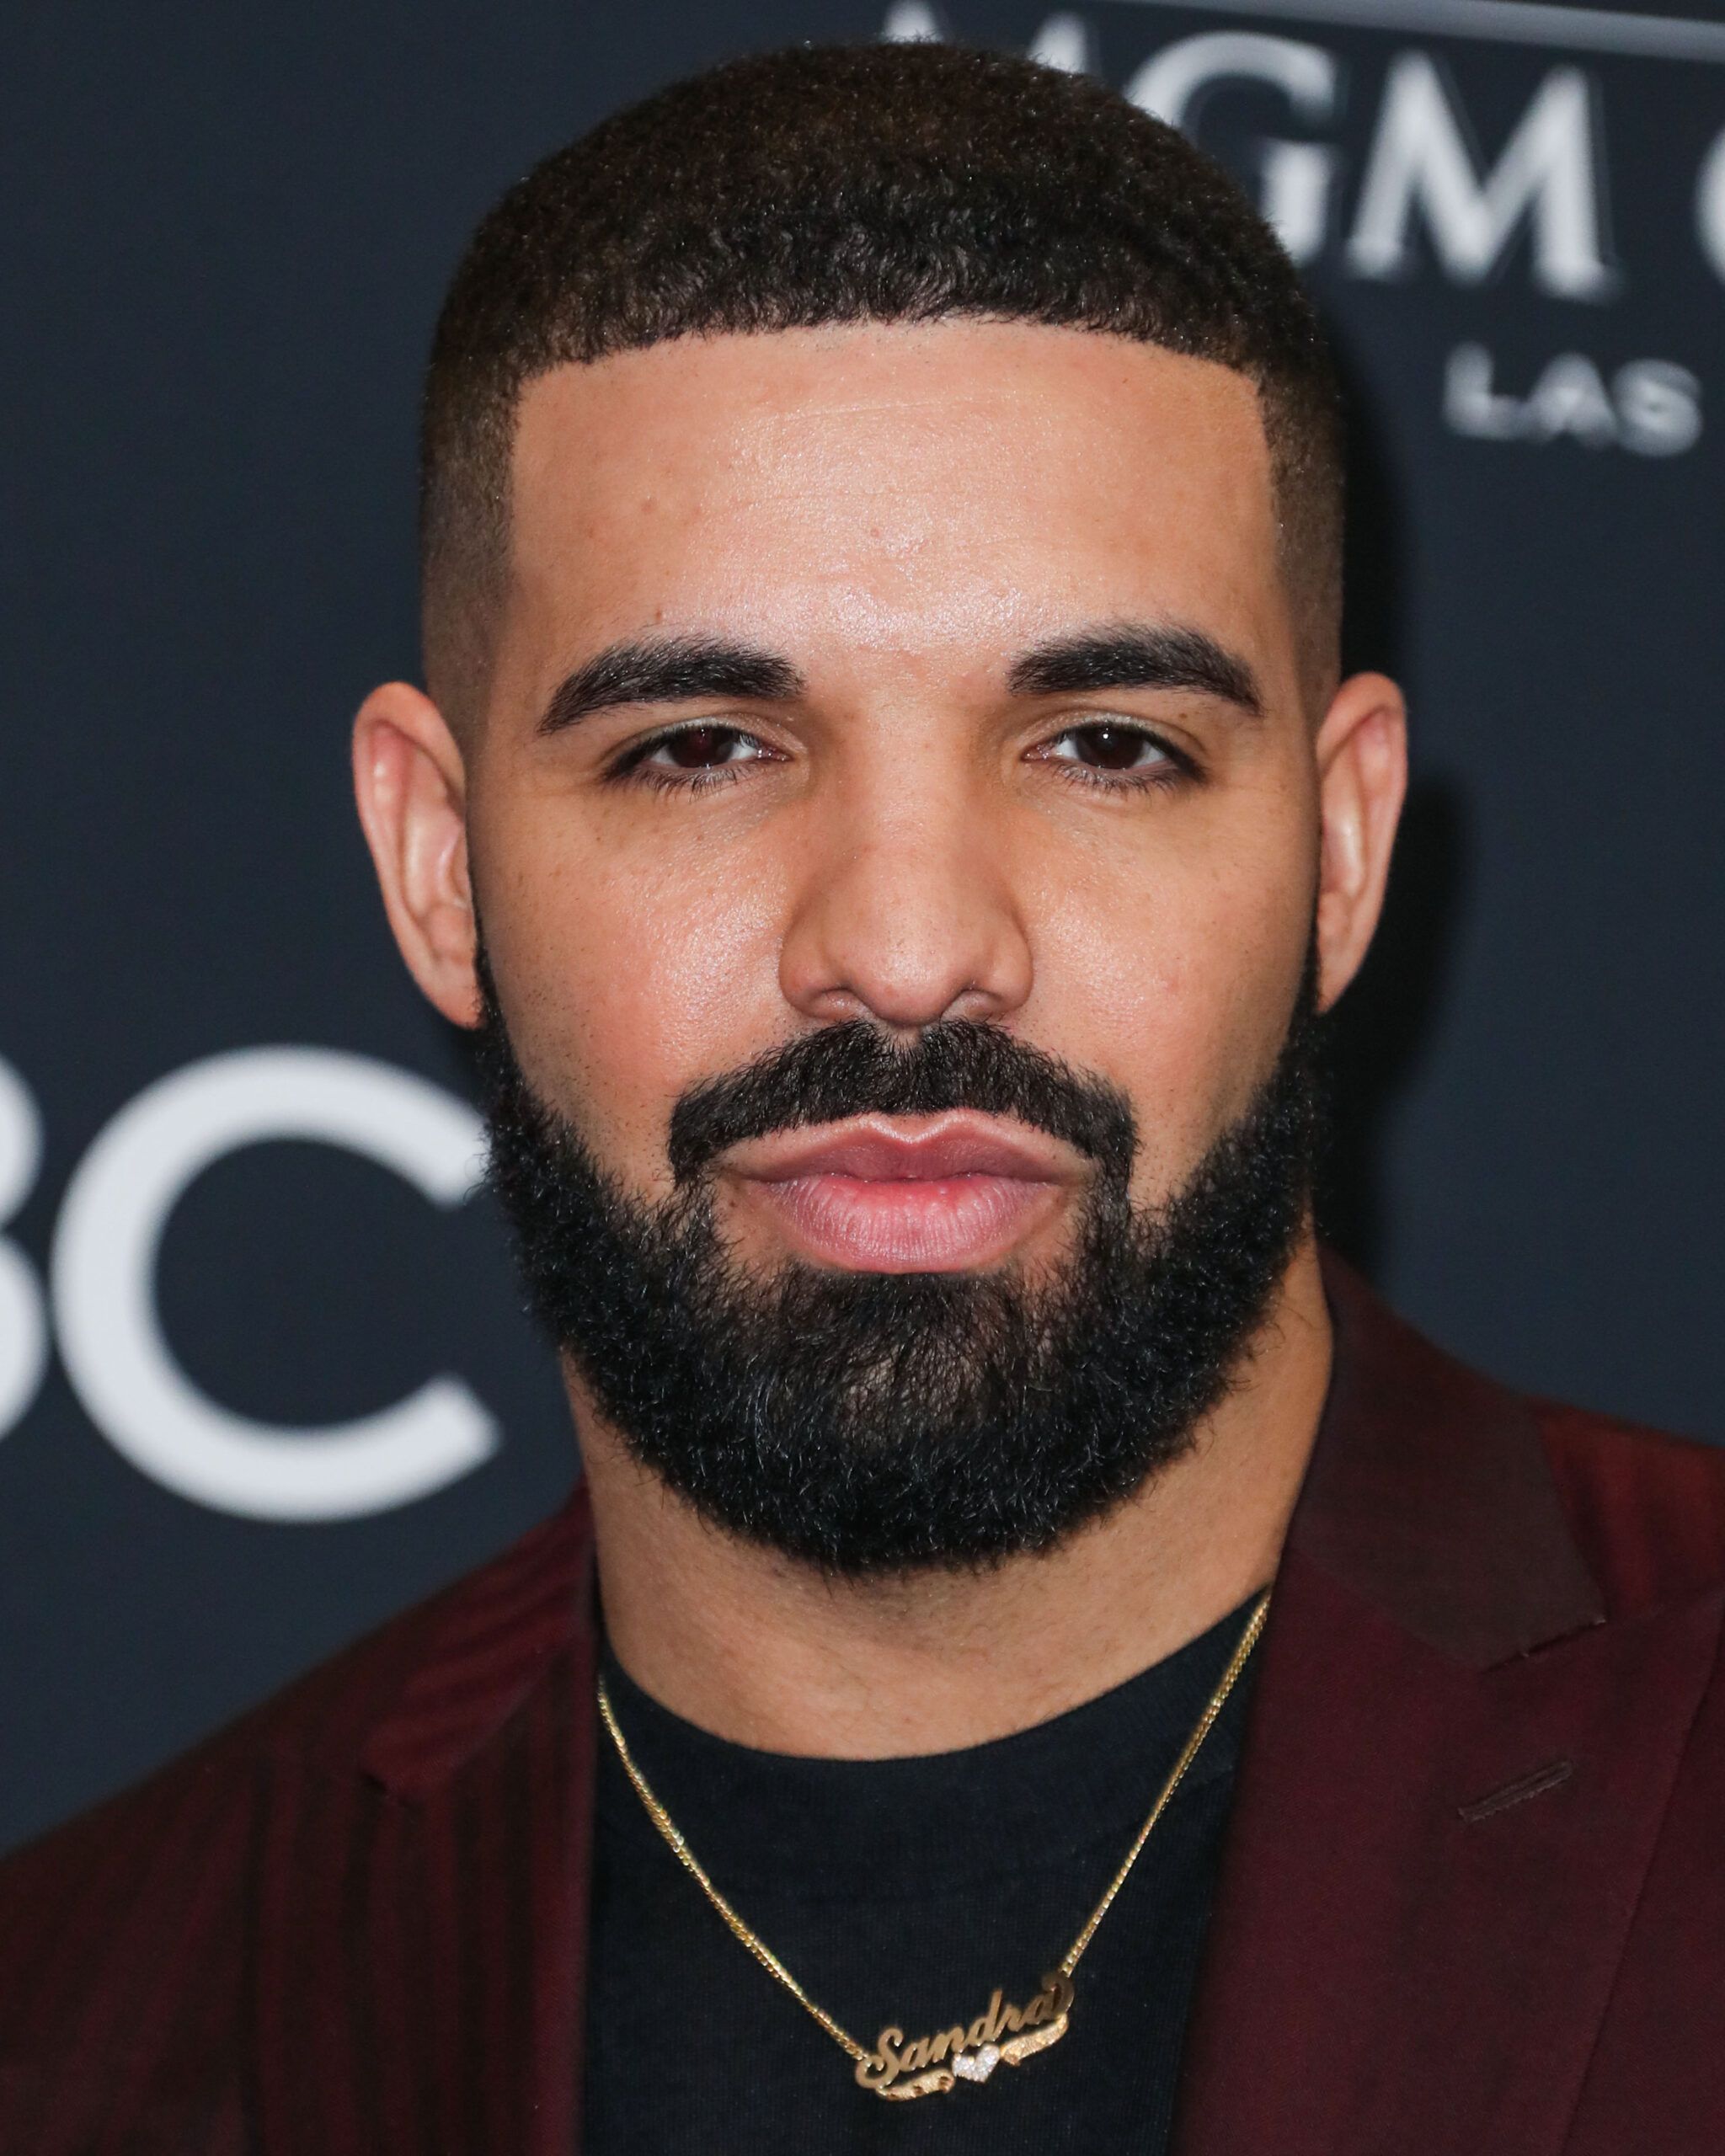 Drake Credits R Kelly As Co-Lyricist on 'Certified Lover Boy' Album